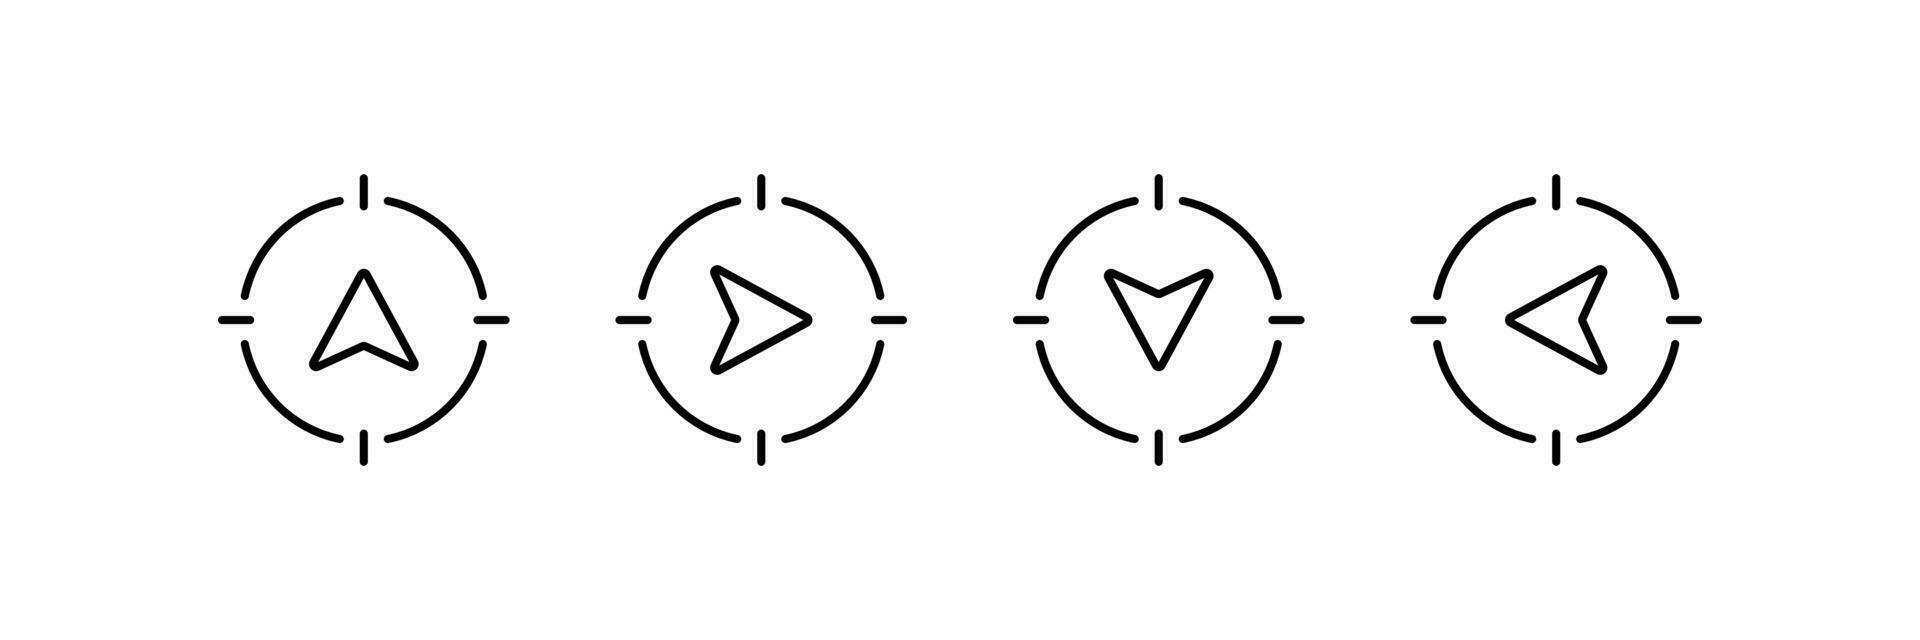 Compass icon set. Editable stroke. Vector illustration design.